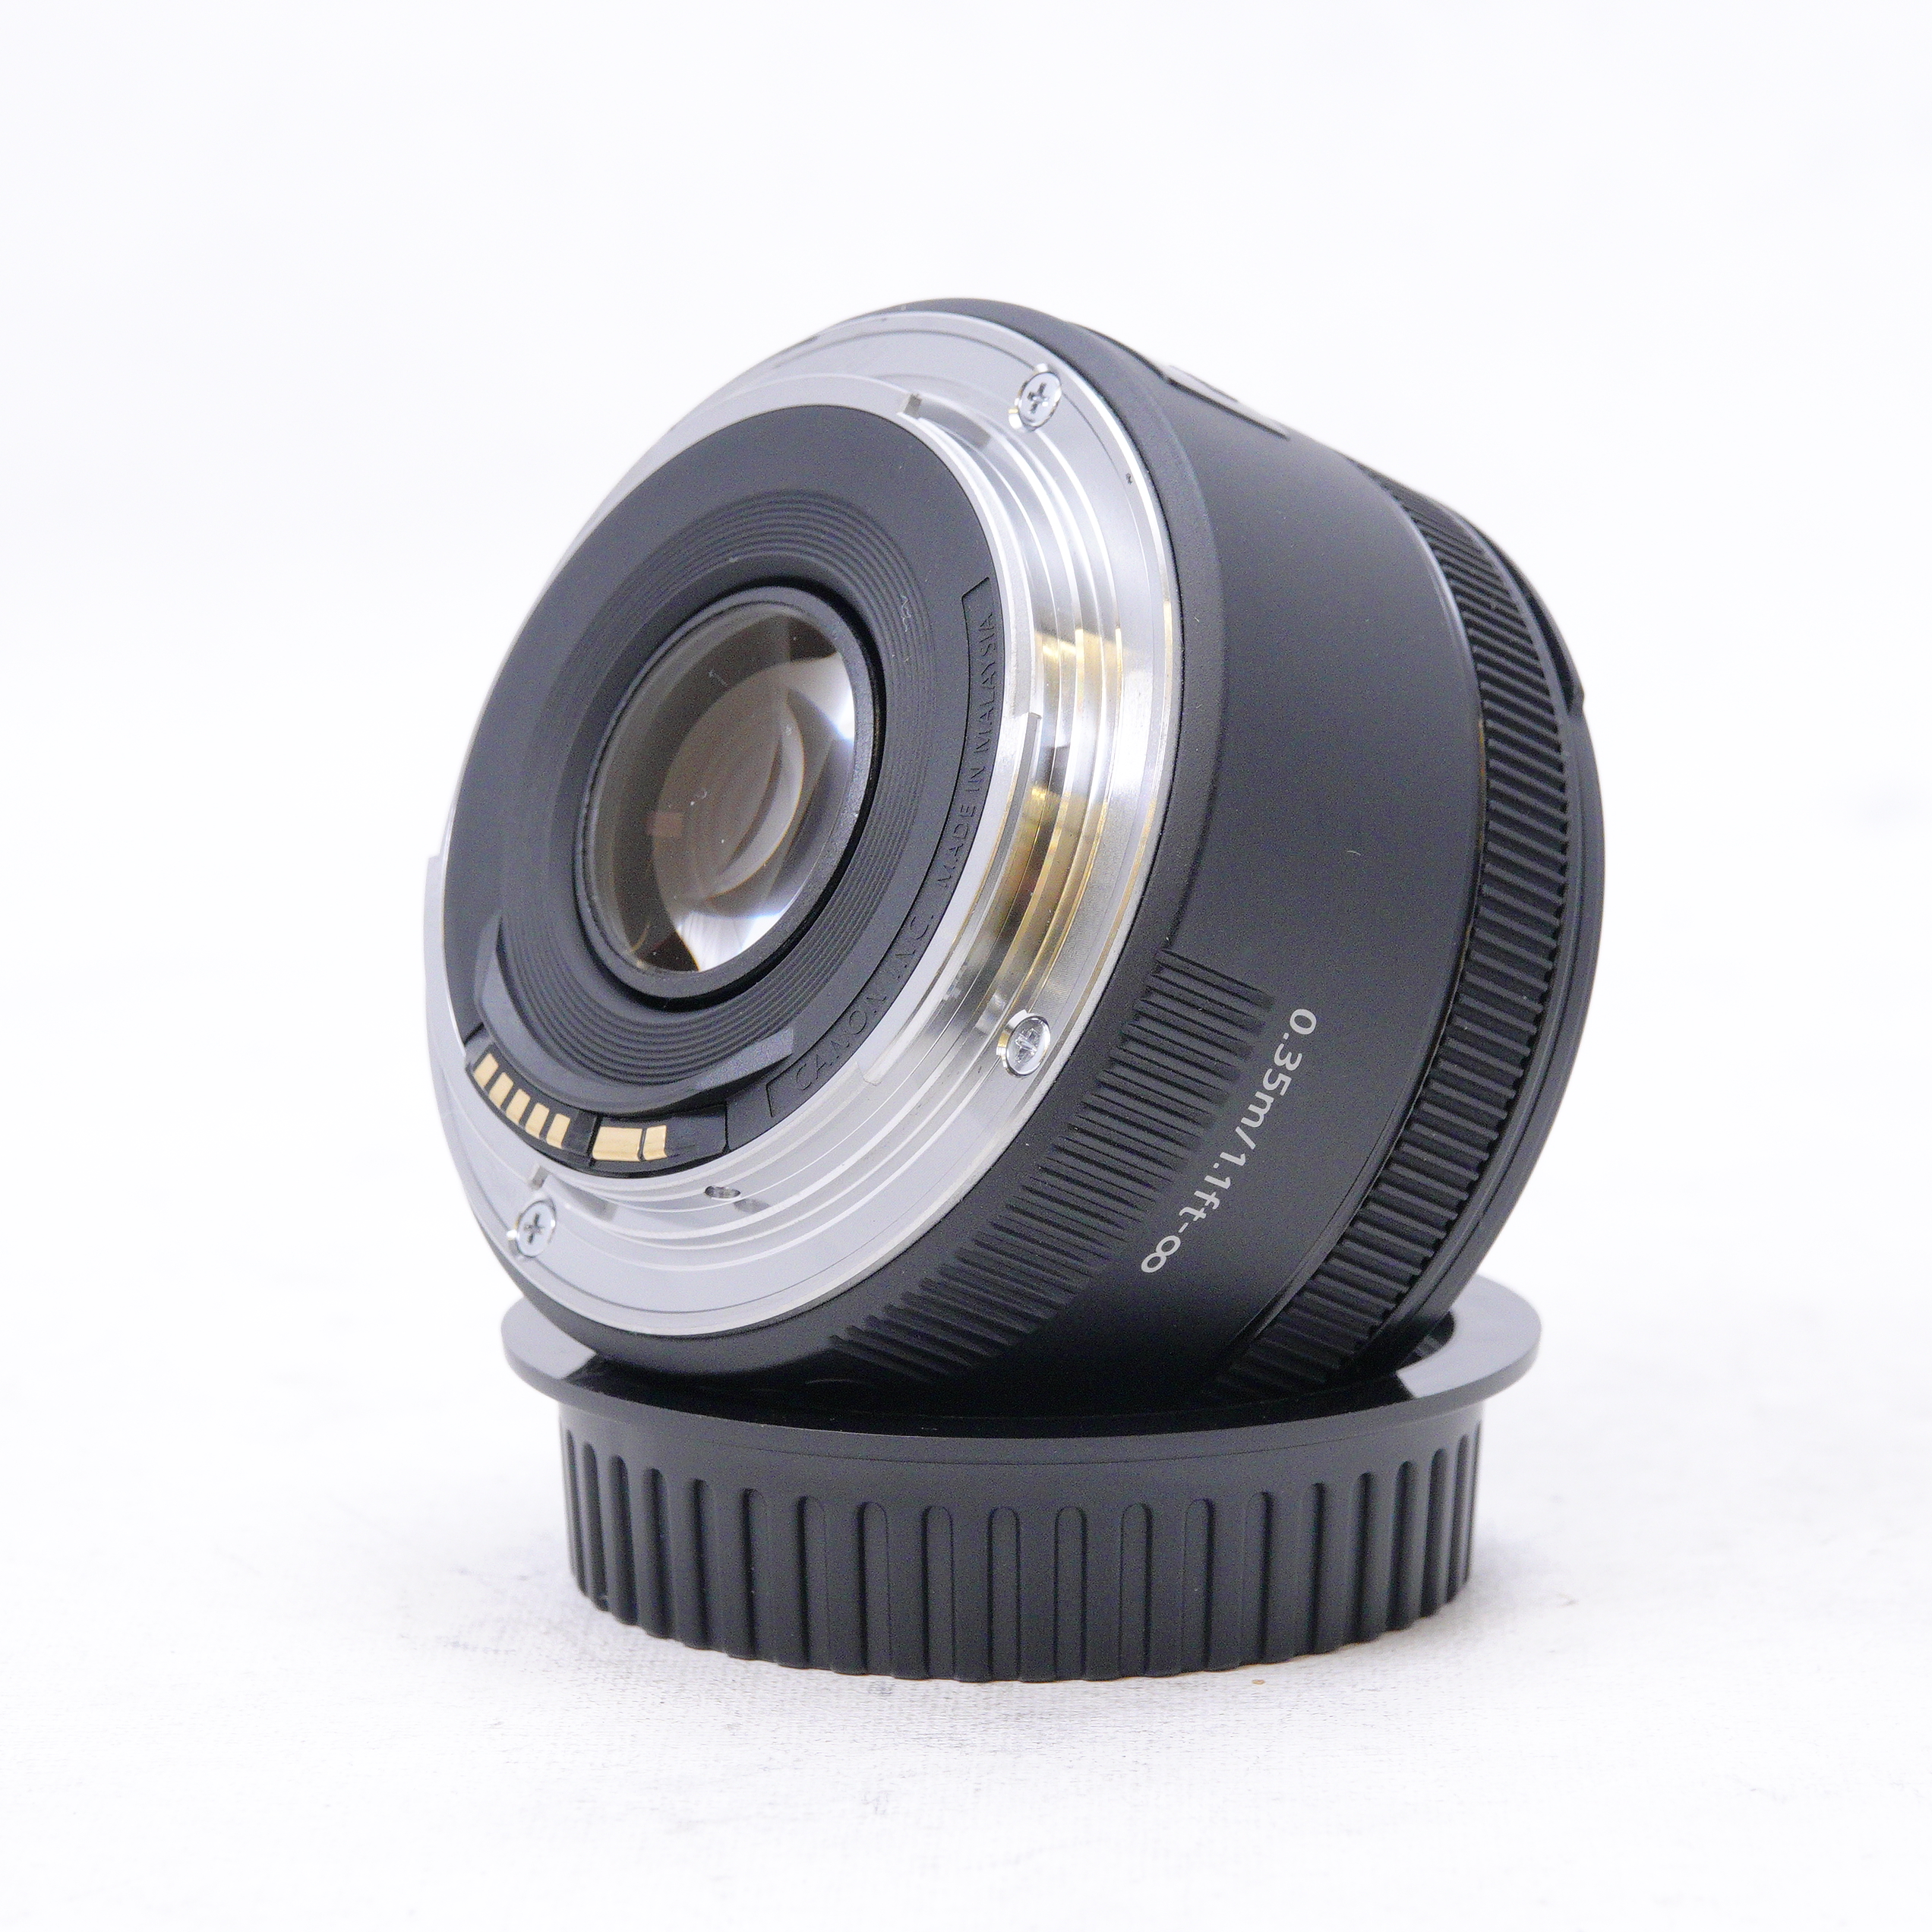 Lente Canon EF 50mm f1.8 STM con caja - Usado